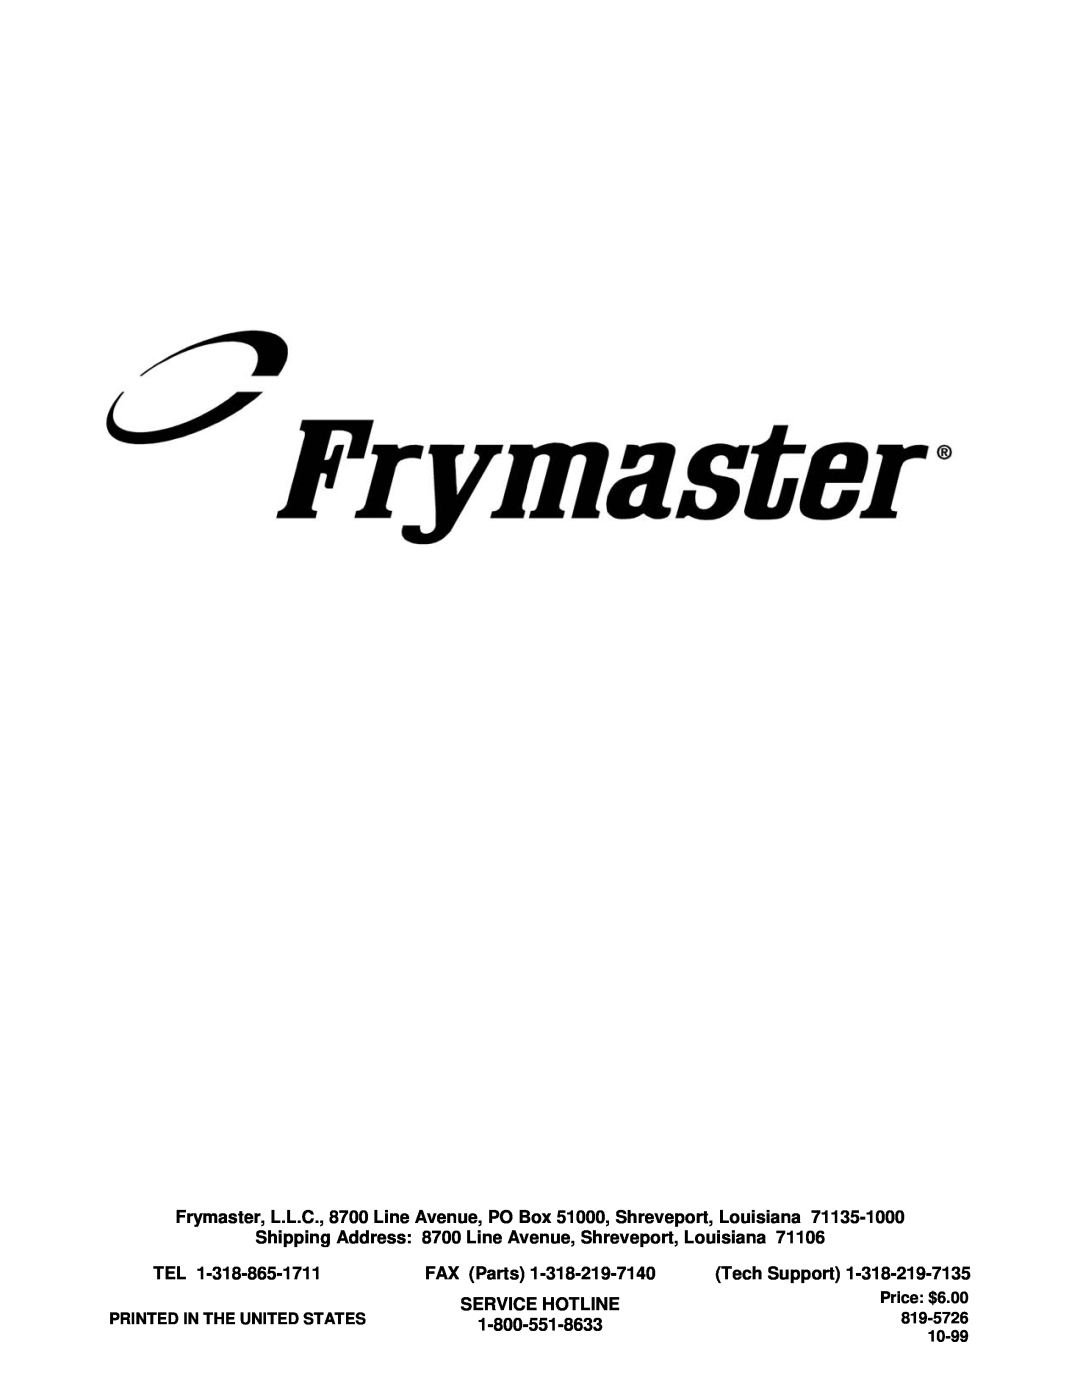 Frymaster CE Shipping Address 8700 Line Avenue, Shreveport, Louisiana, FAX Parts, Tech Support, Service Hotline, 819-5726 